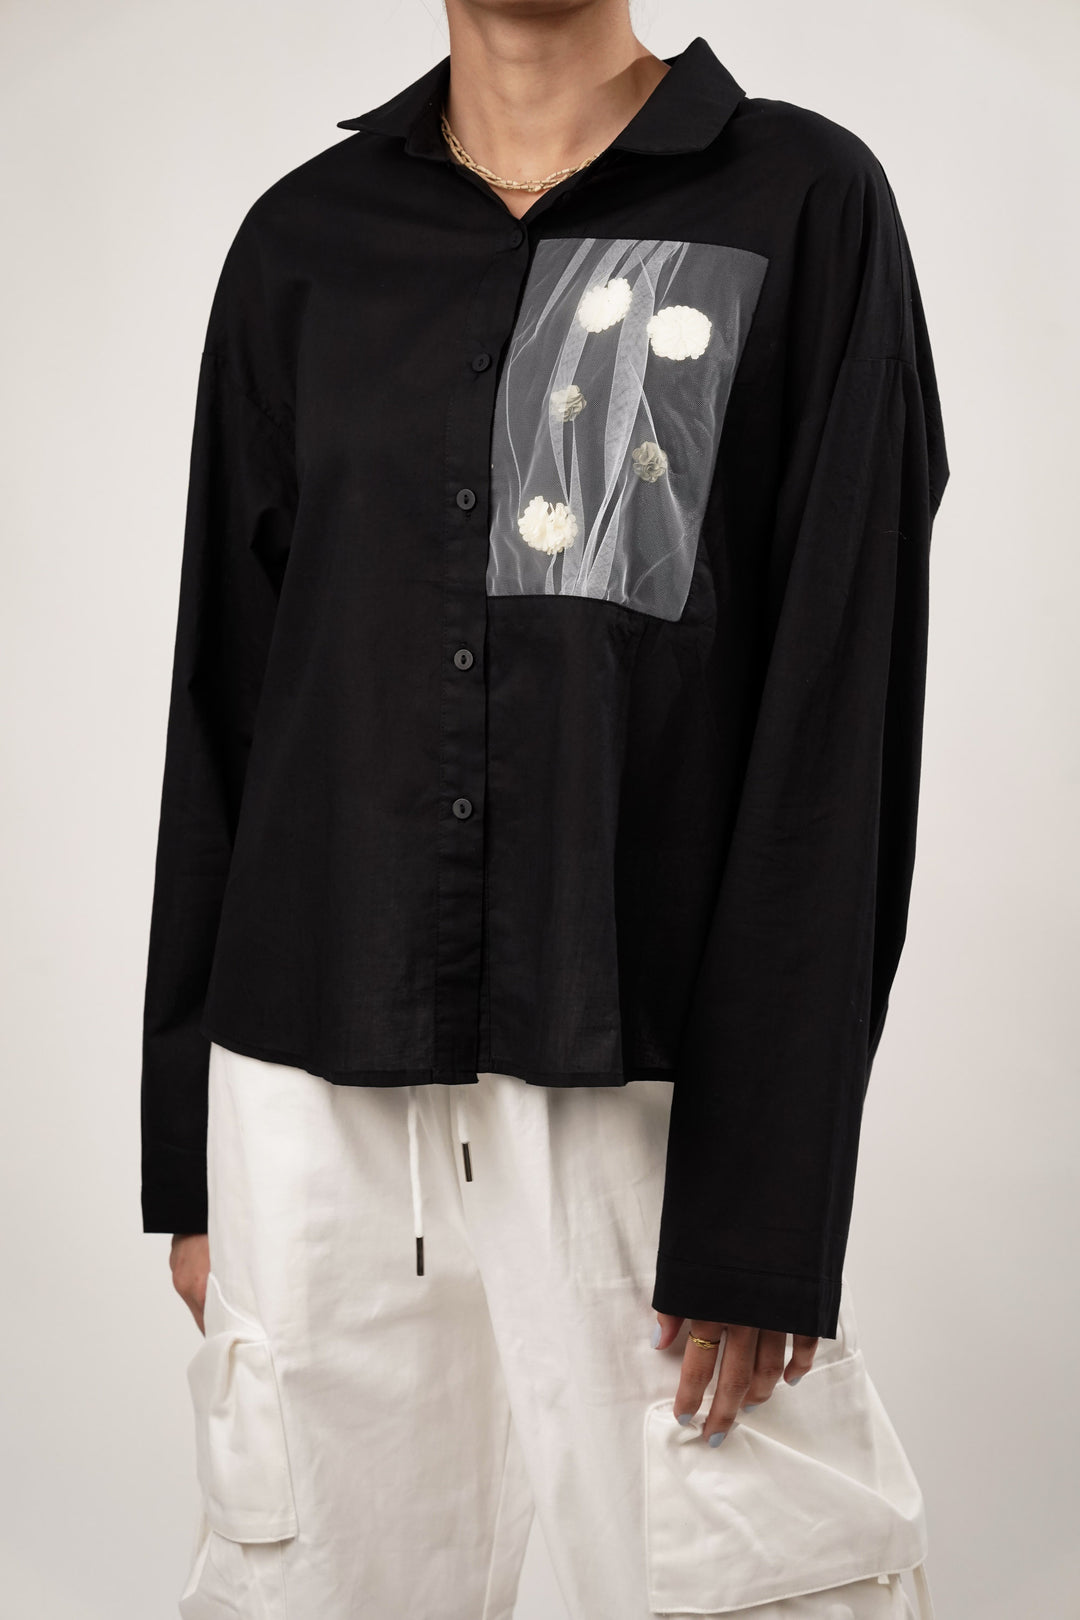 Jasmine Black Bloom oversized streetwear shirt